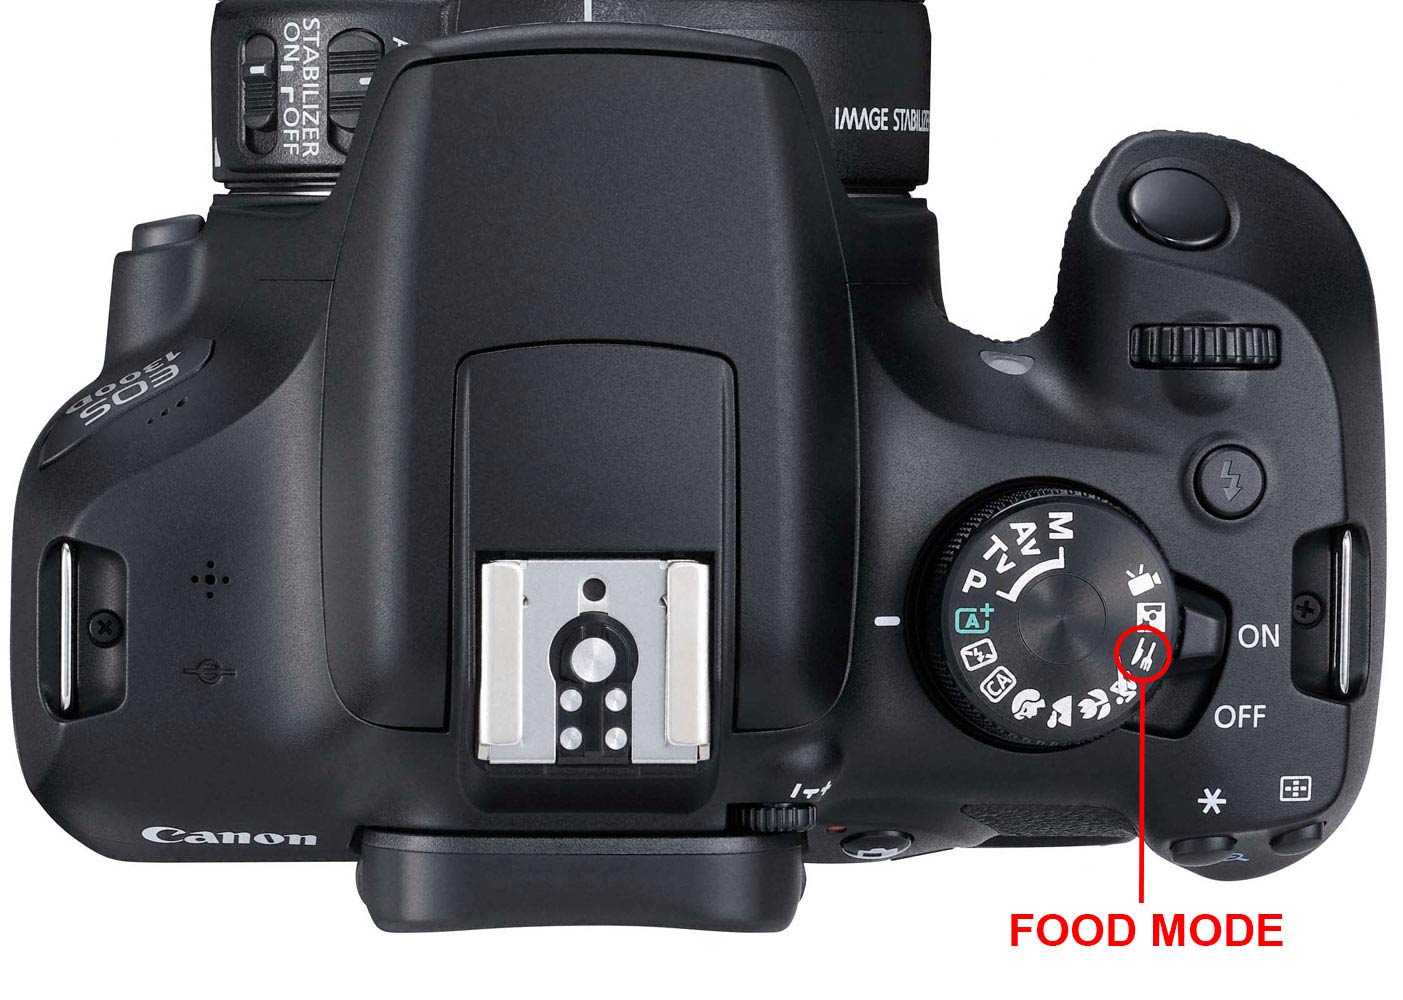 Canon-EOS-T6-Food-Mode-Dial.jpg